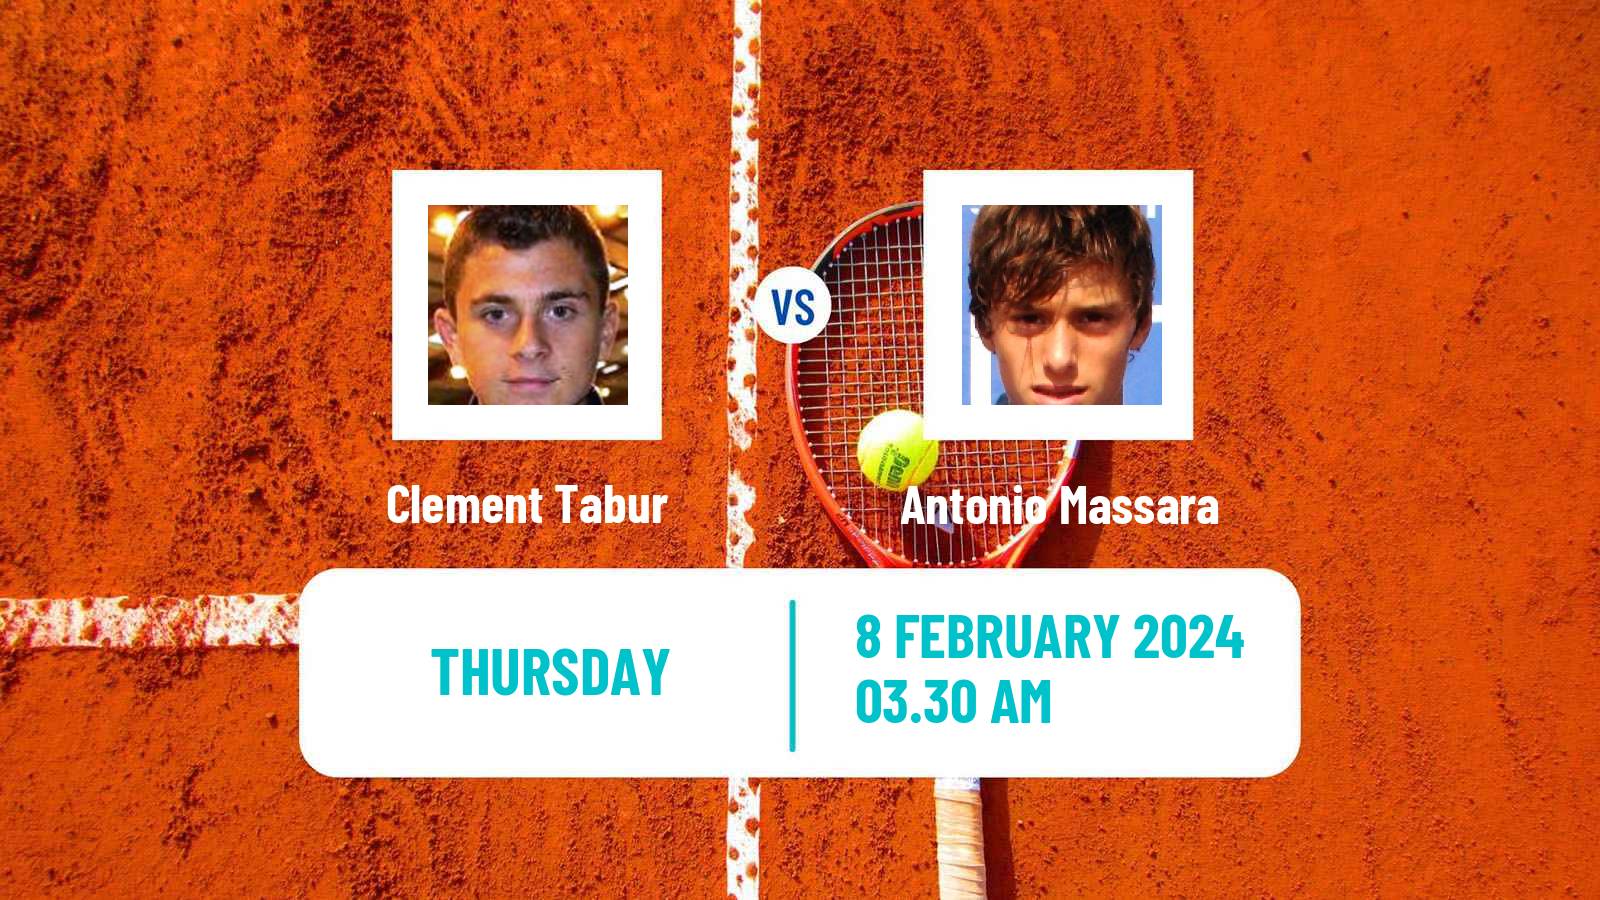 Tennis ITF M25 Antalya 2 Men Clement Tabur - Antonio Massara